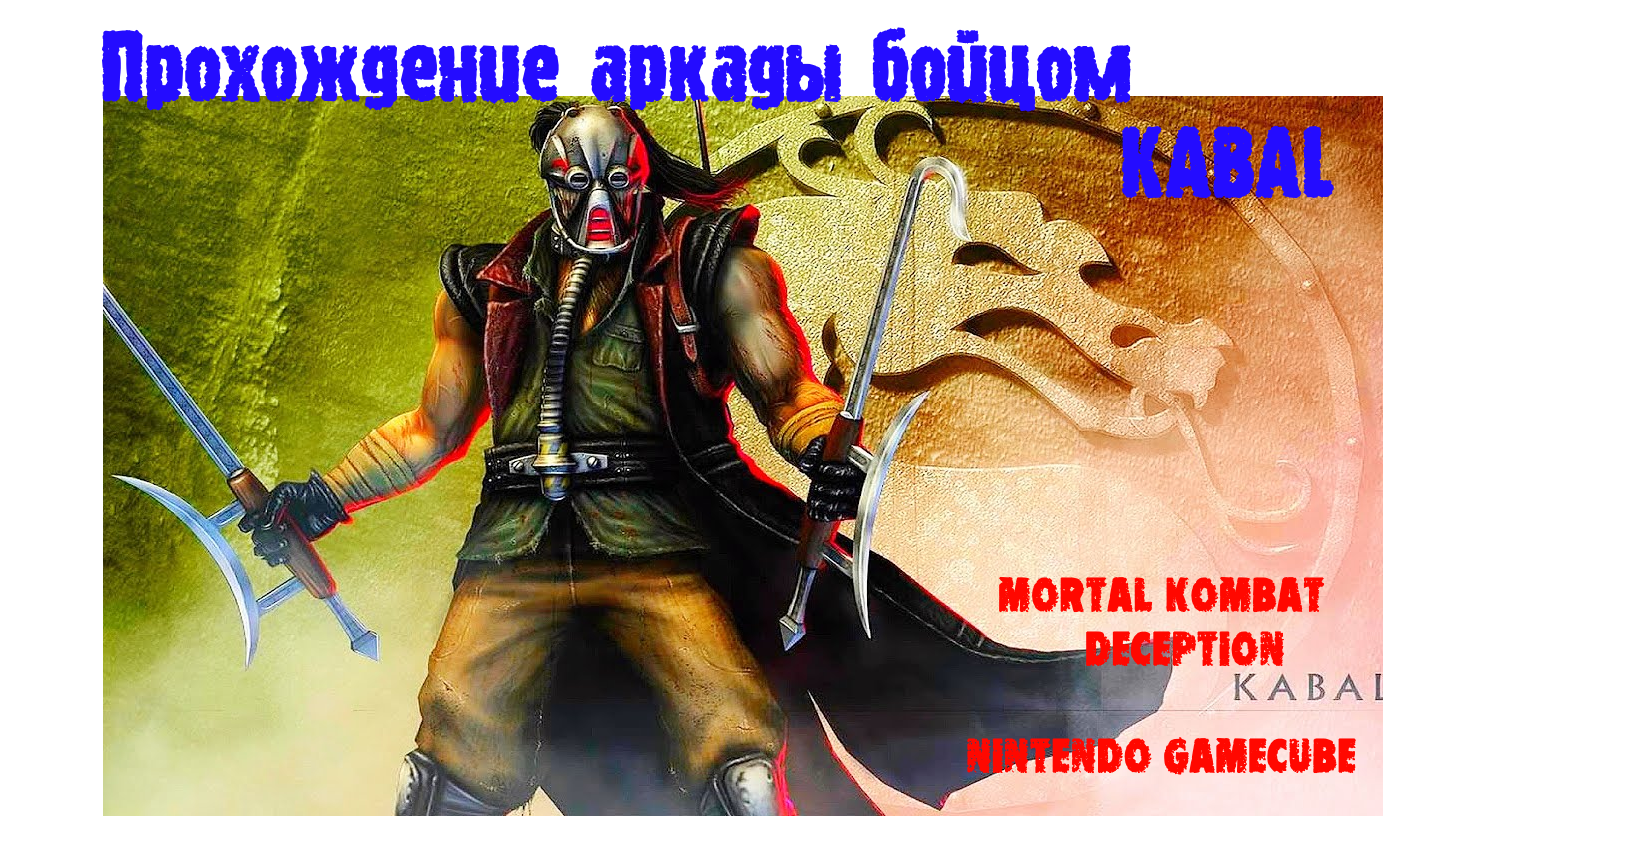 Let's play Mortal Kombat Deception Прохождение аркады бойцом Kabal